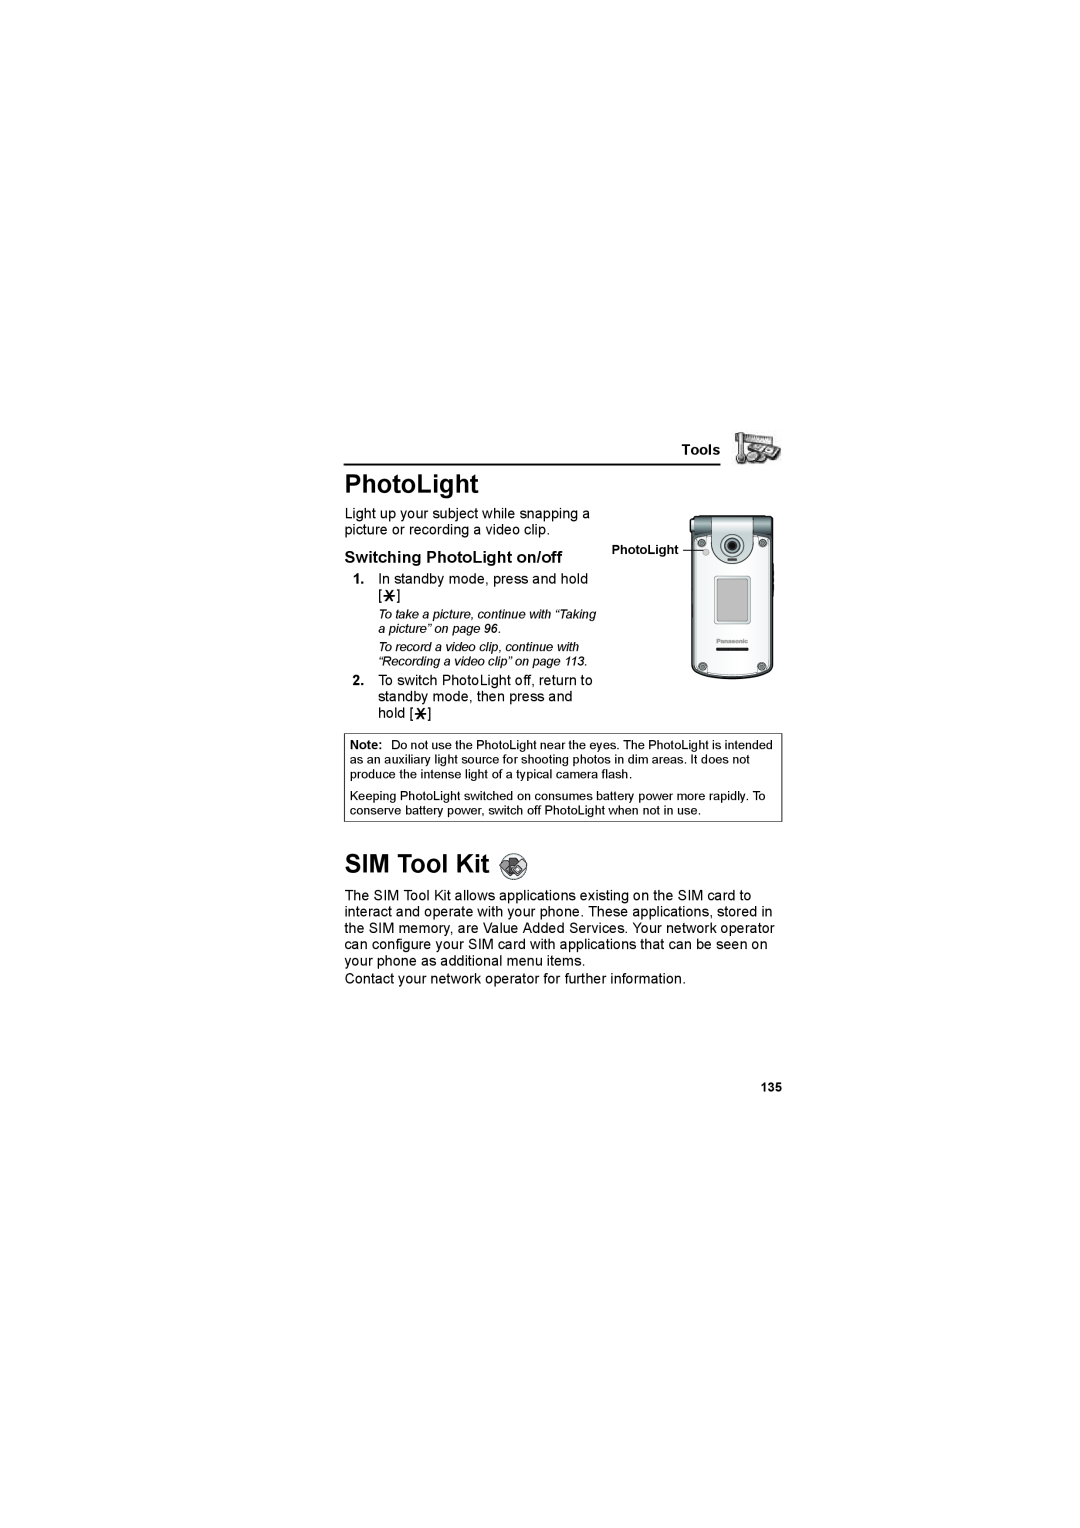 Panasonic EB-X800 manual SIM Tool Kit, Switching PhotoLight on/off, Tools 